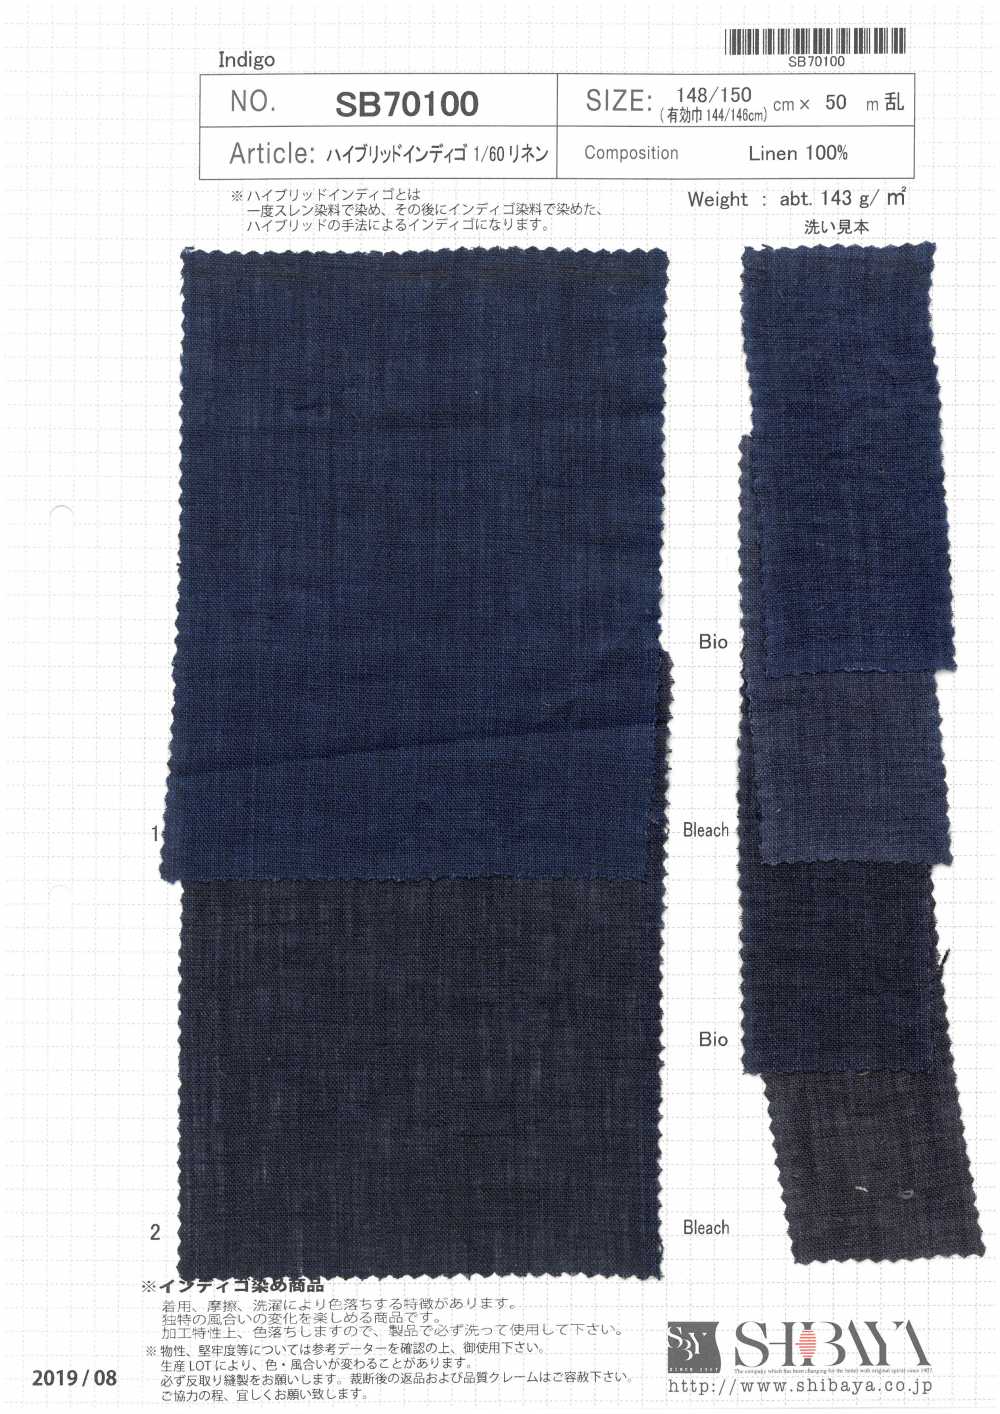 SB70100 Hybrid Indigo 1/60 Linen[Textile / Fabric] SHIBAYA